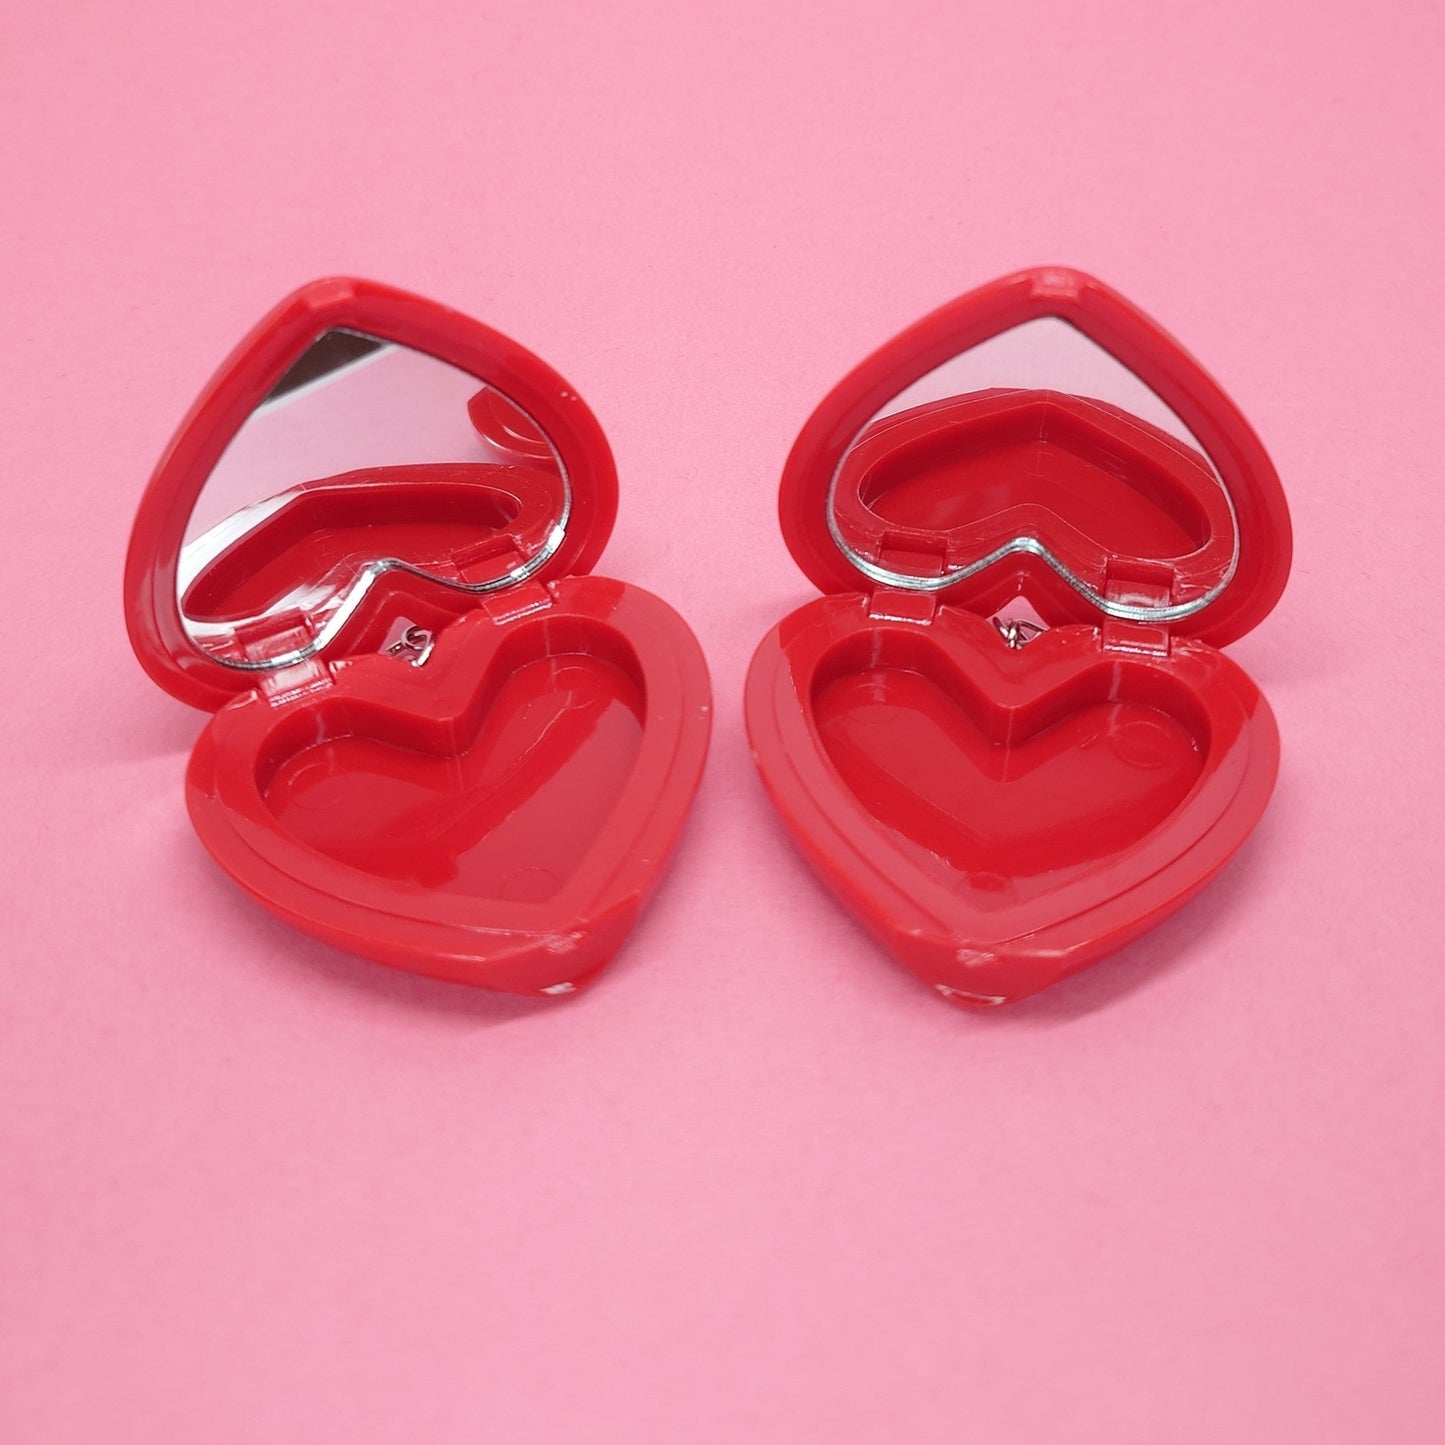 Mini heart compact mirror earrings